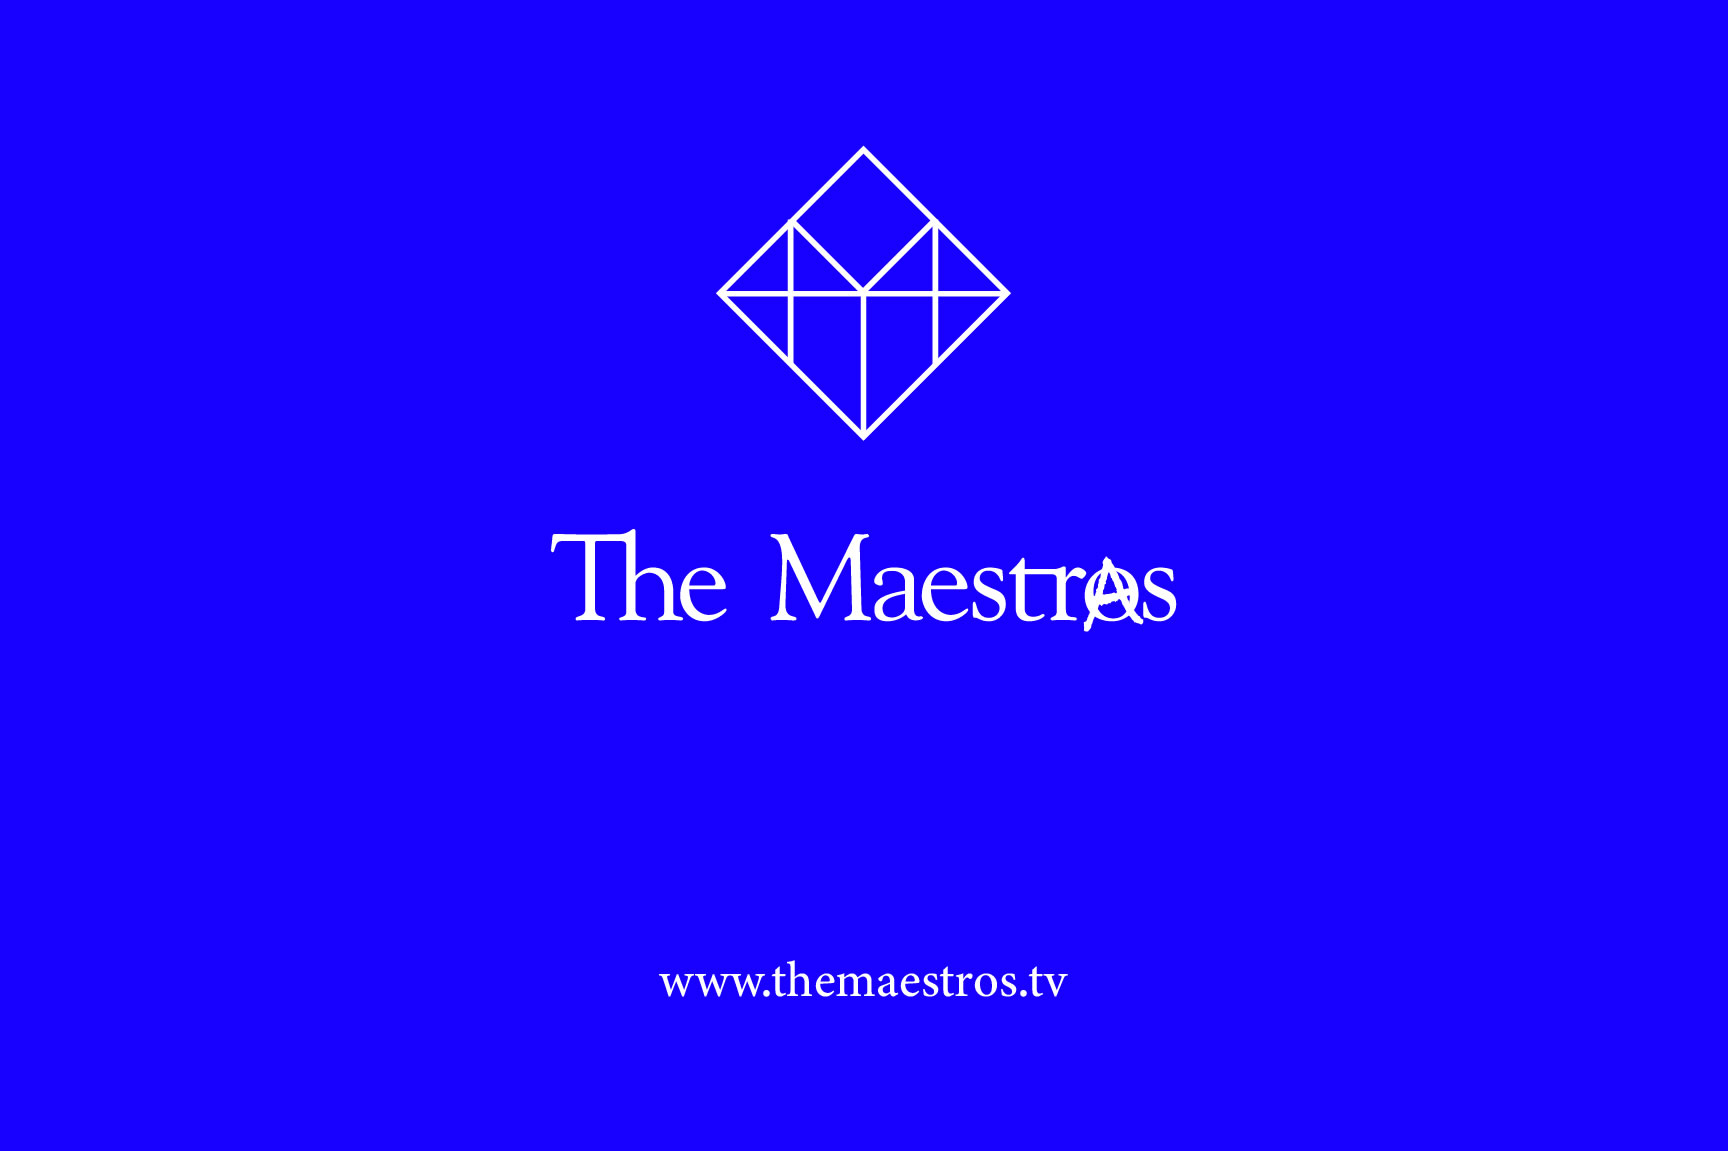 The Maestros